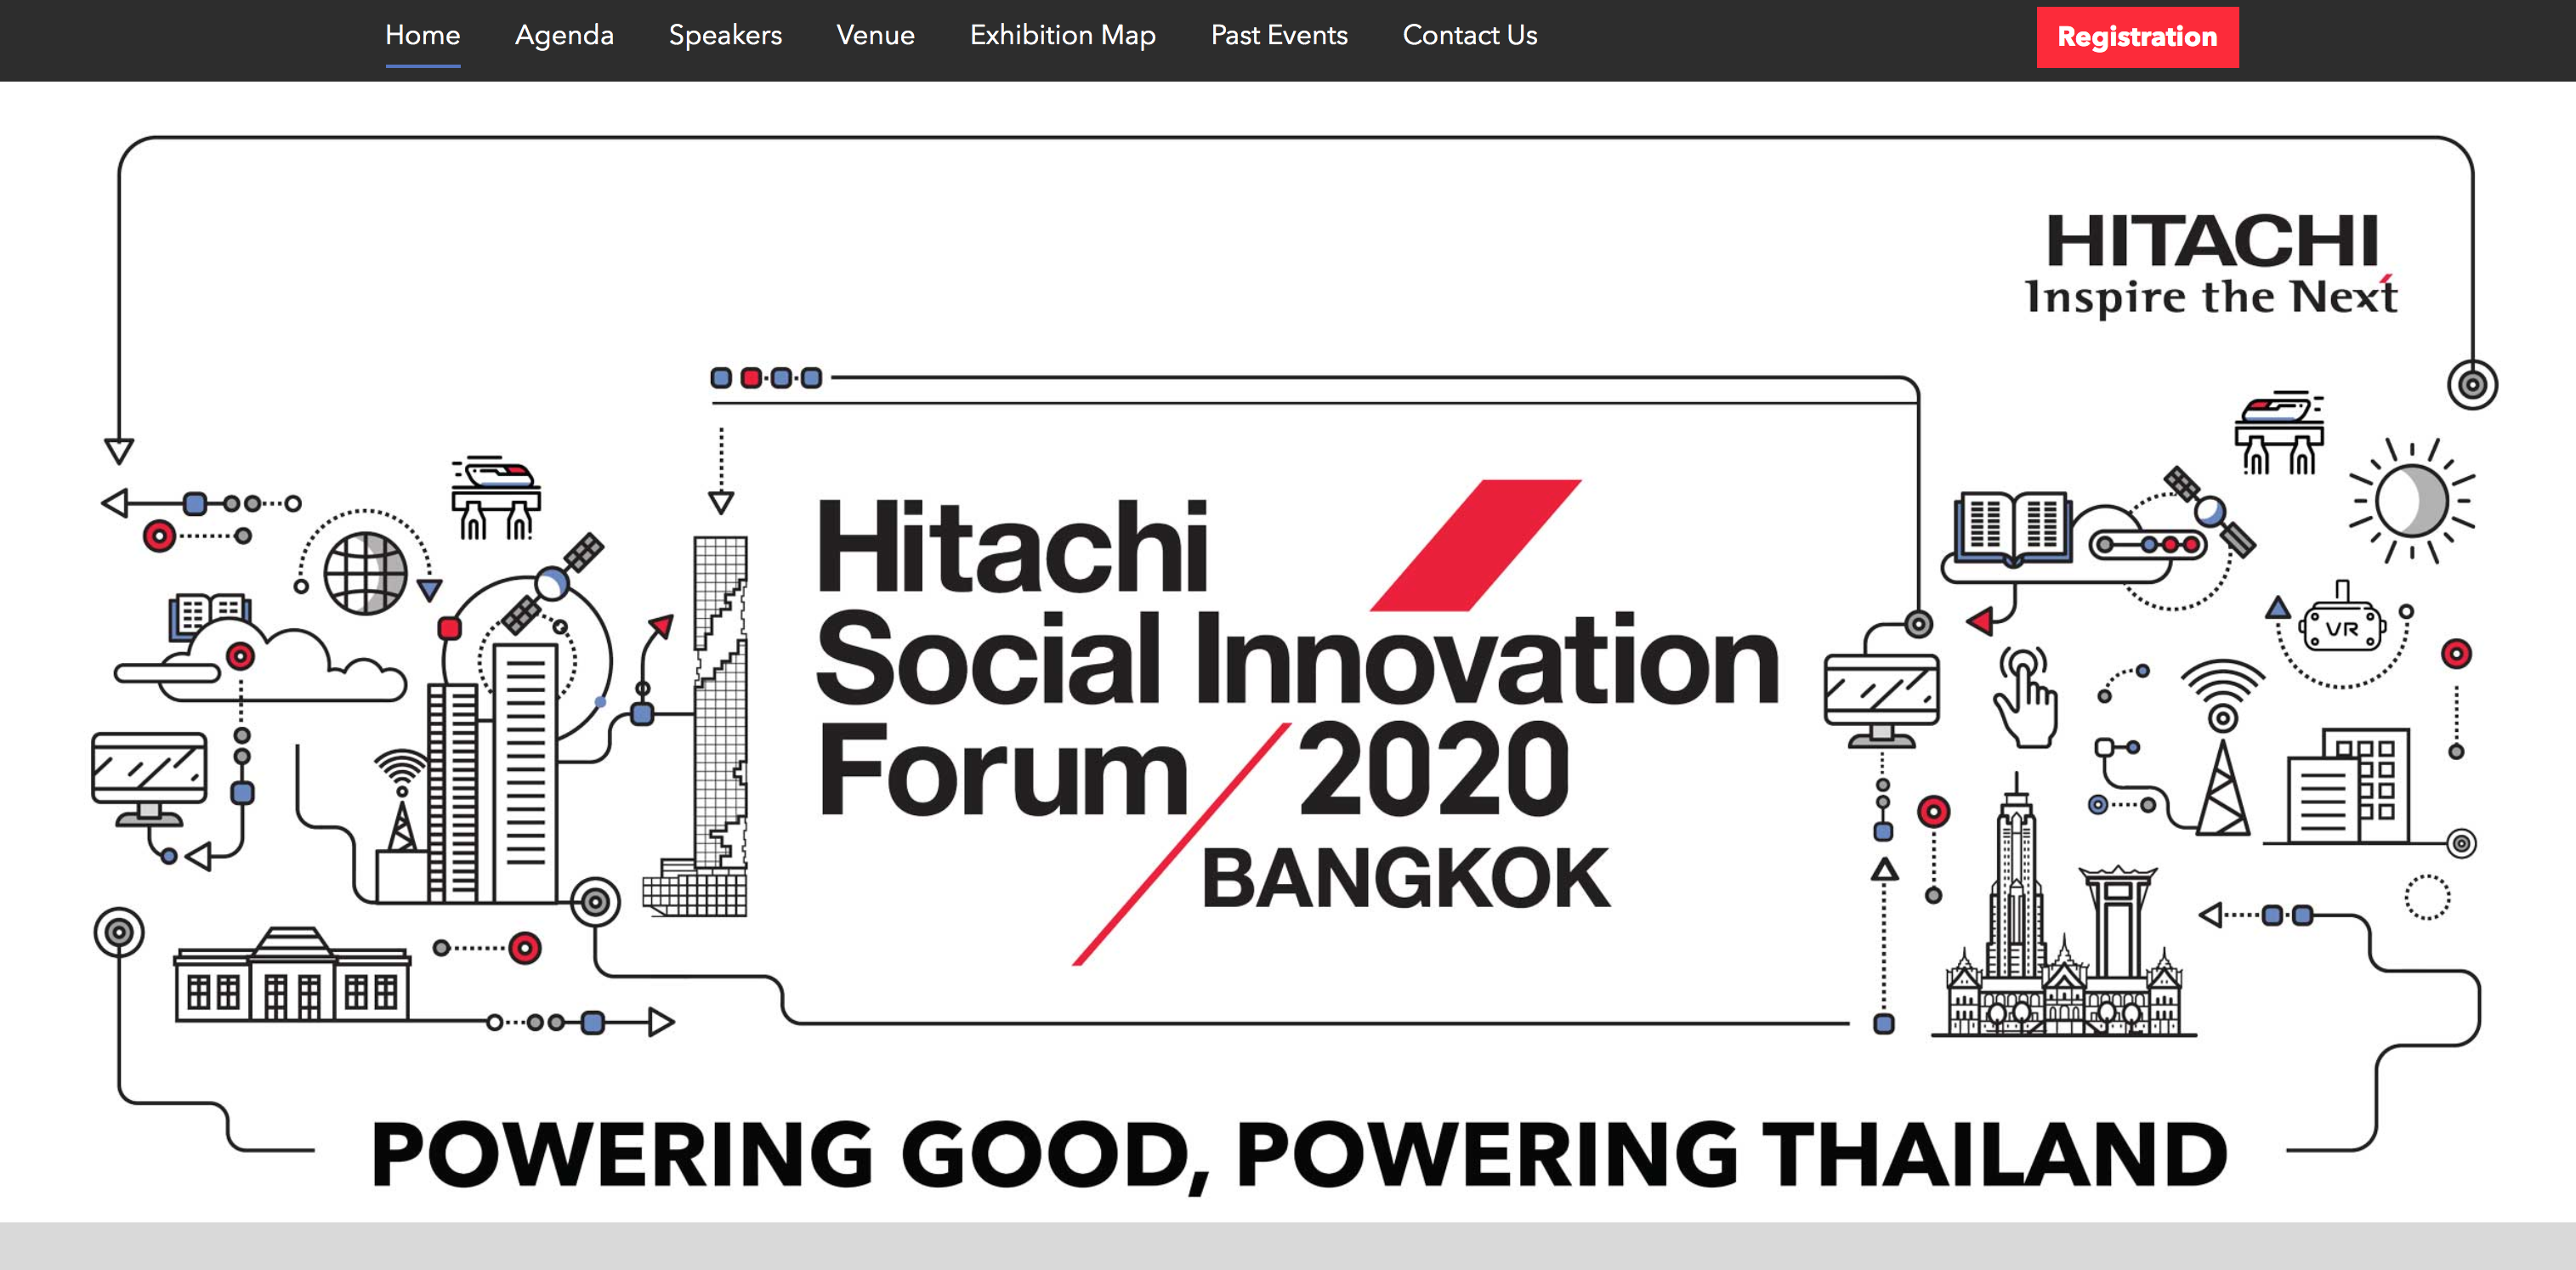 A microsite for Hitachi's 2020 forum in Bangkok